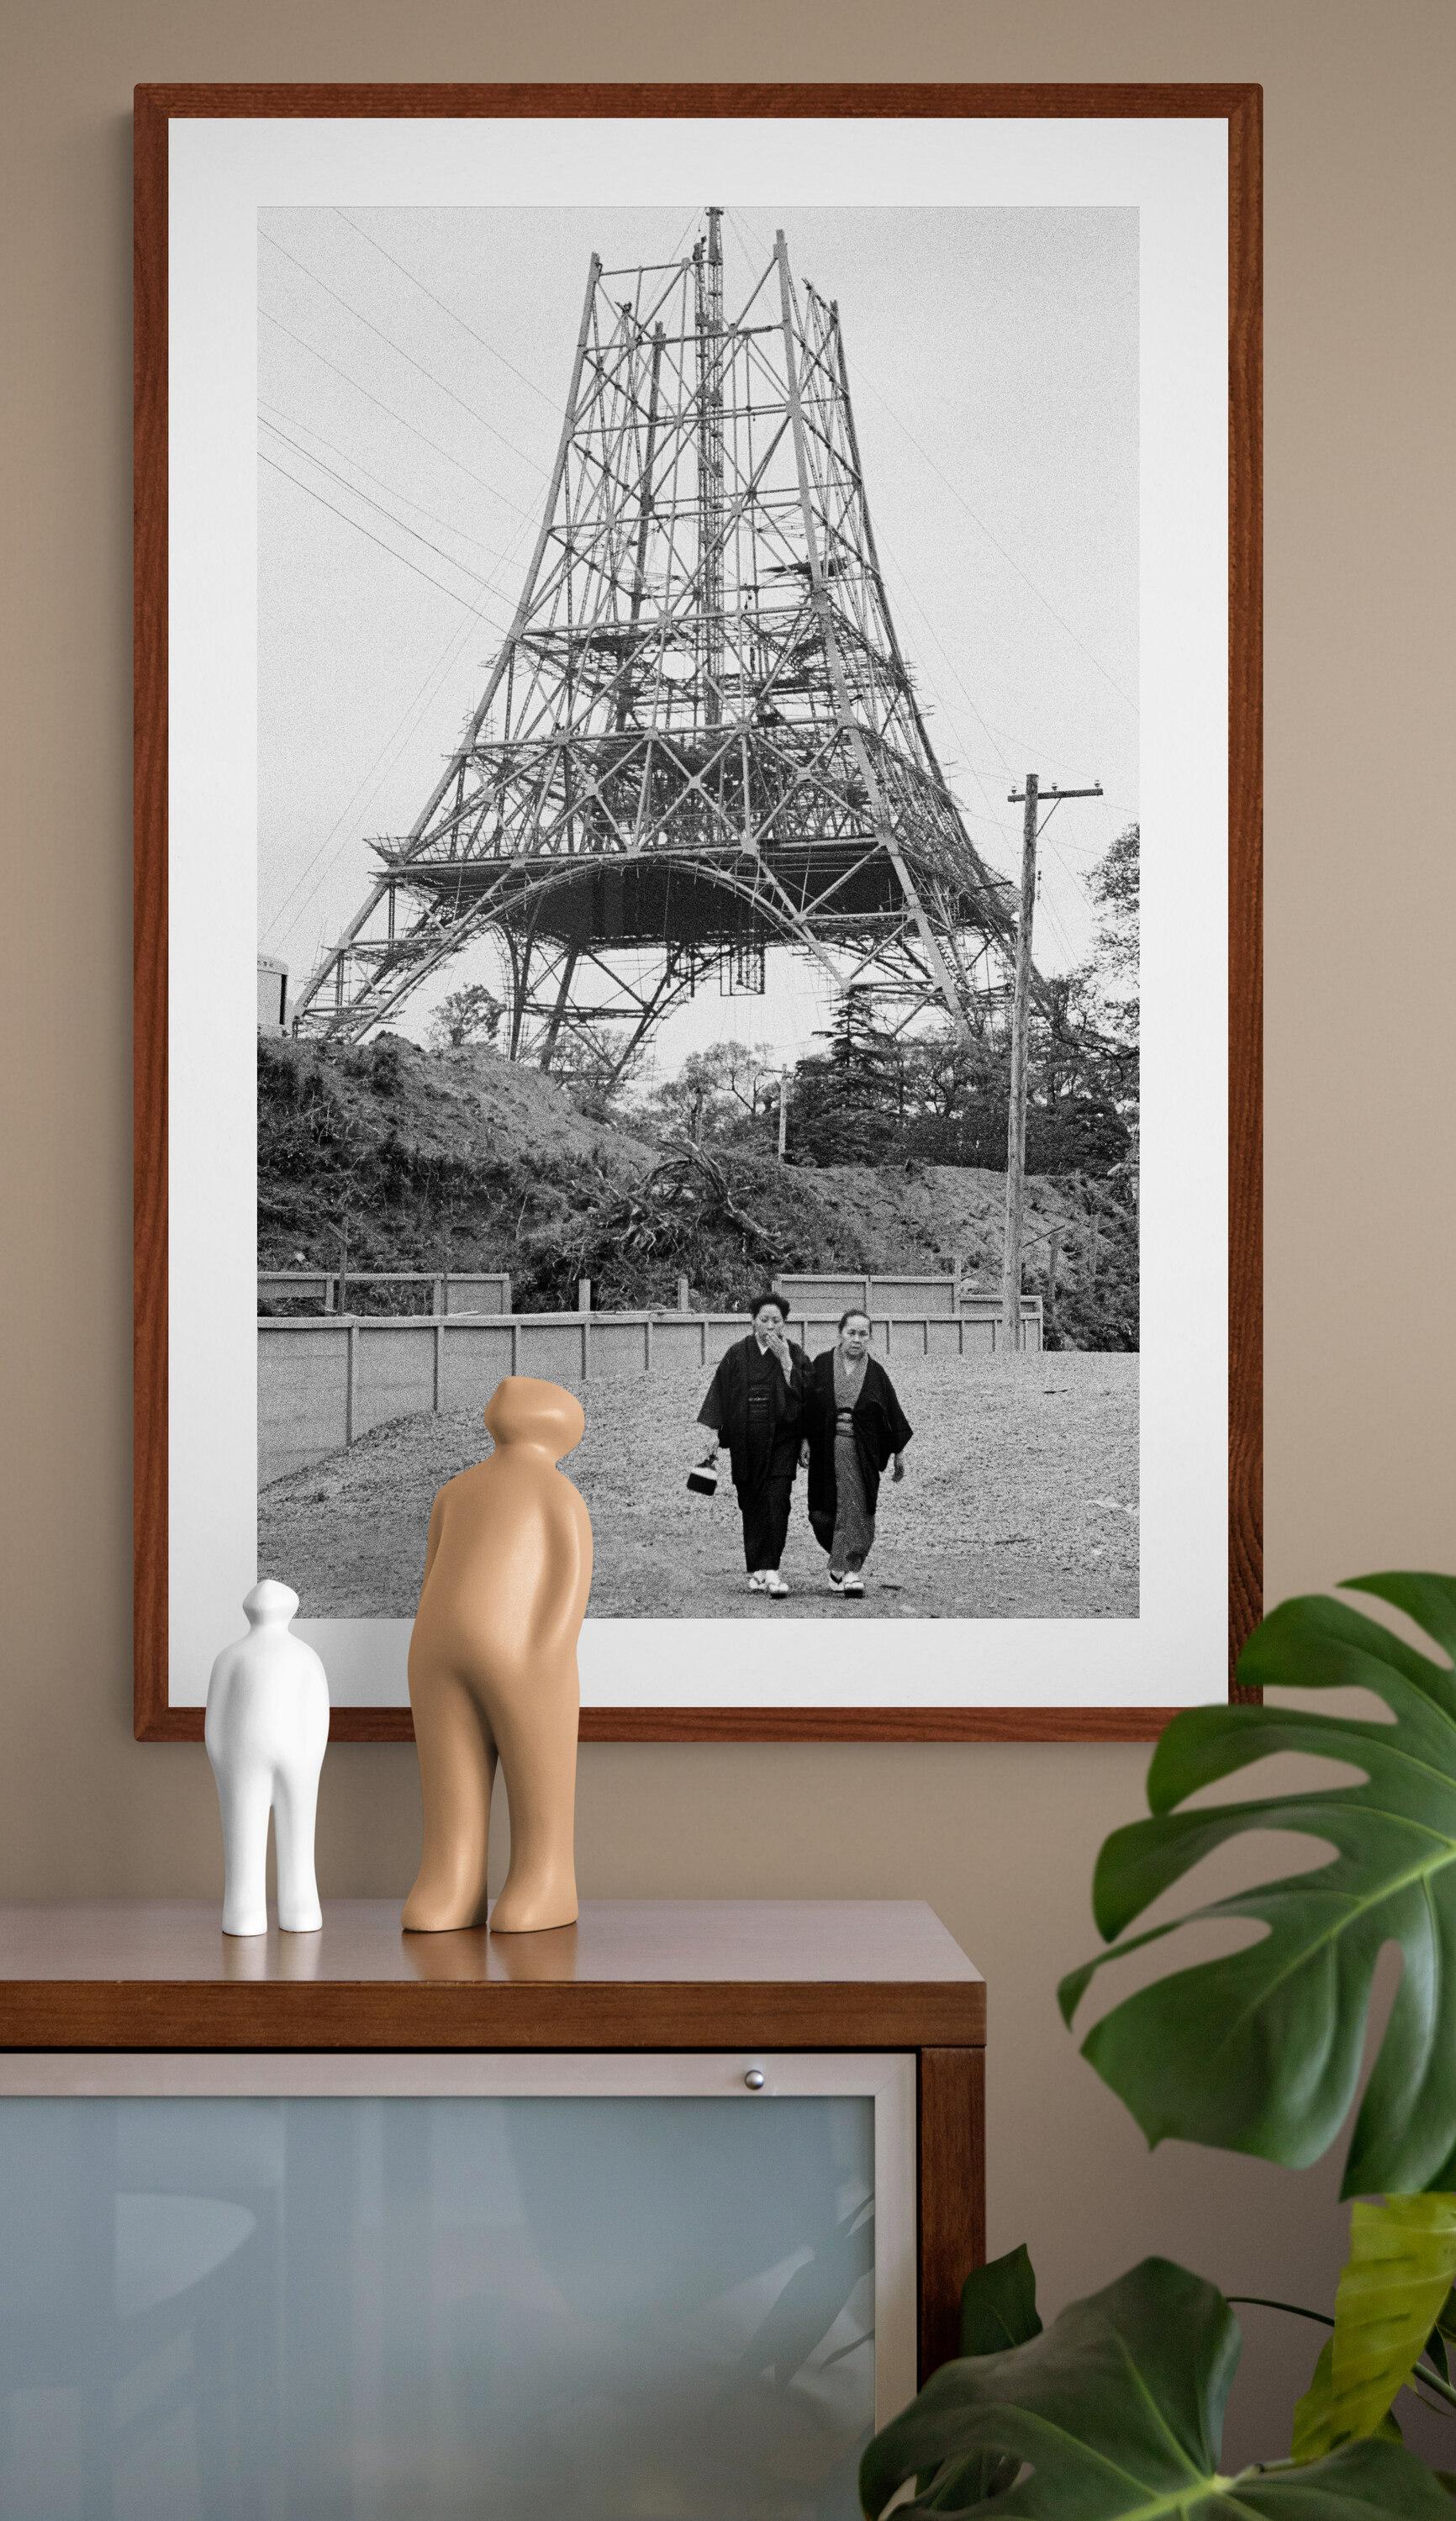  Eiffel Tower, Tokyo ( 1957 ) - Japan - Full Framed Black & White Fine Art Print - Photograph by Fabrizio La Torre